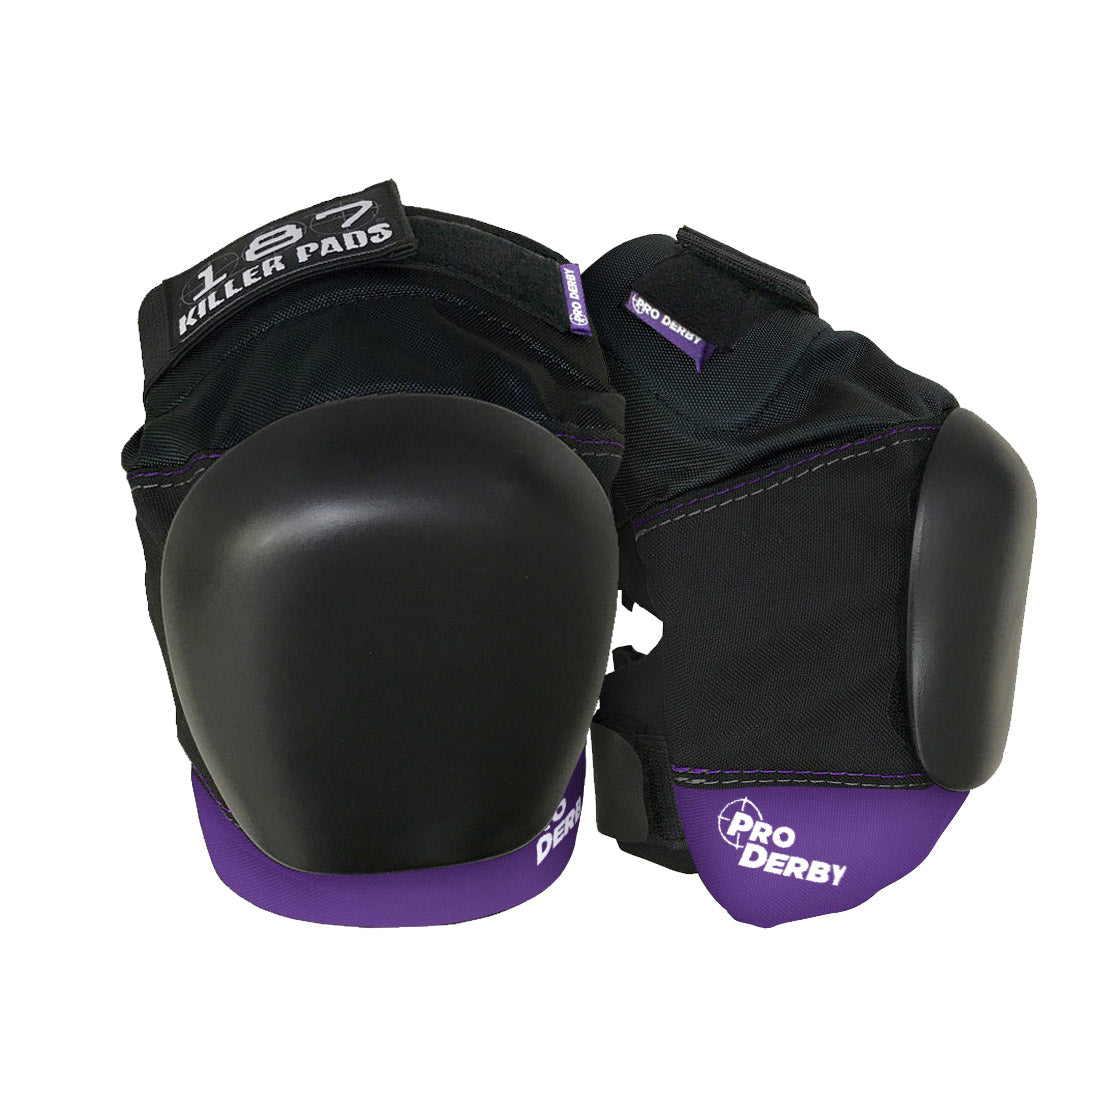 187 Pro Derby Knee - Black/Purple Protective Gear